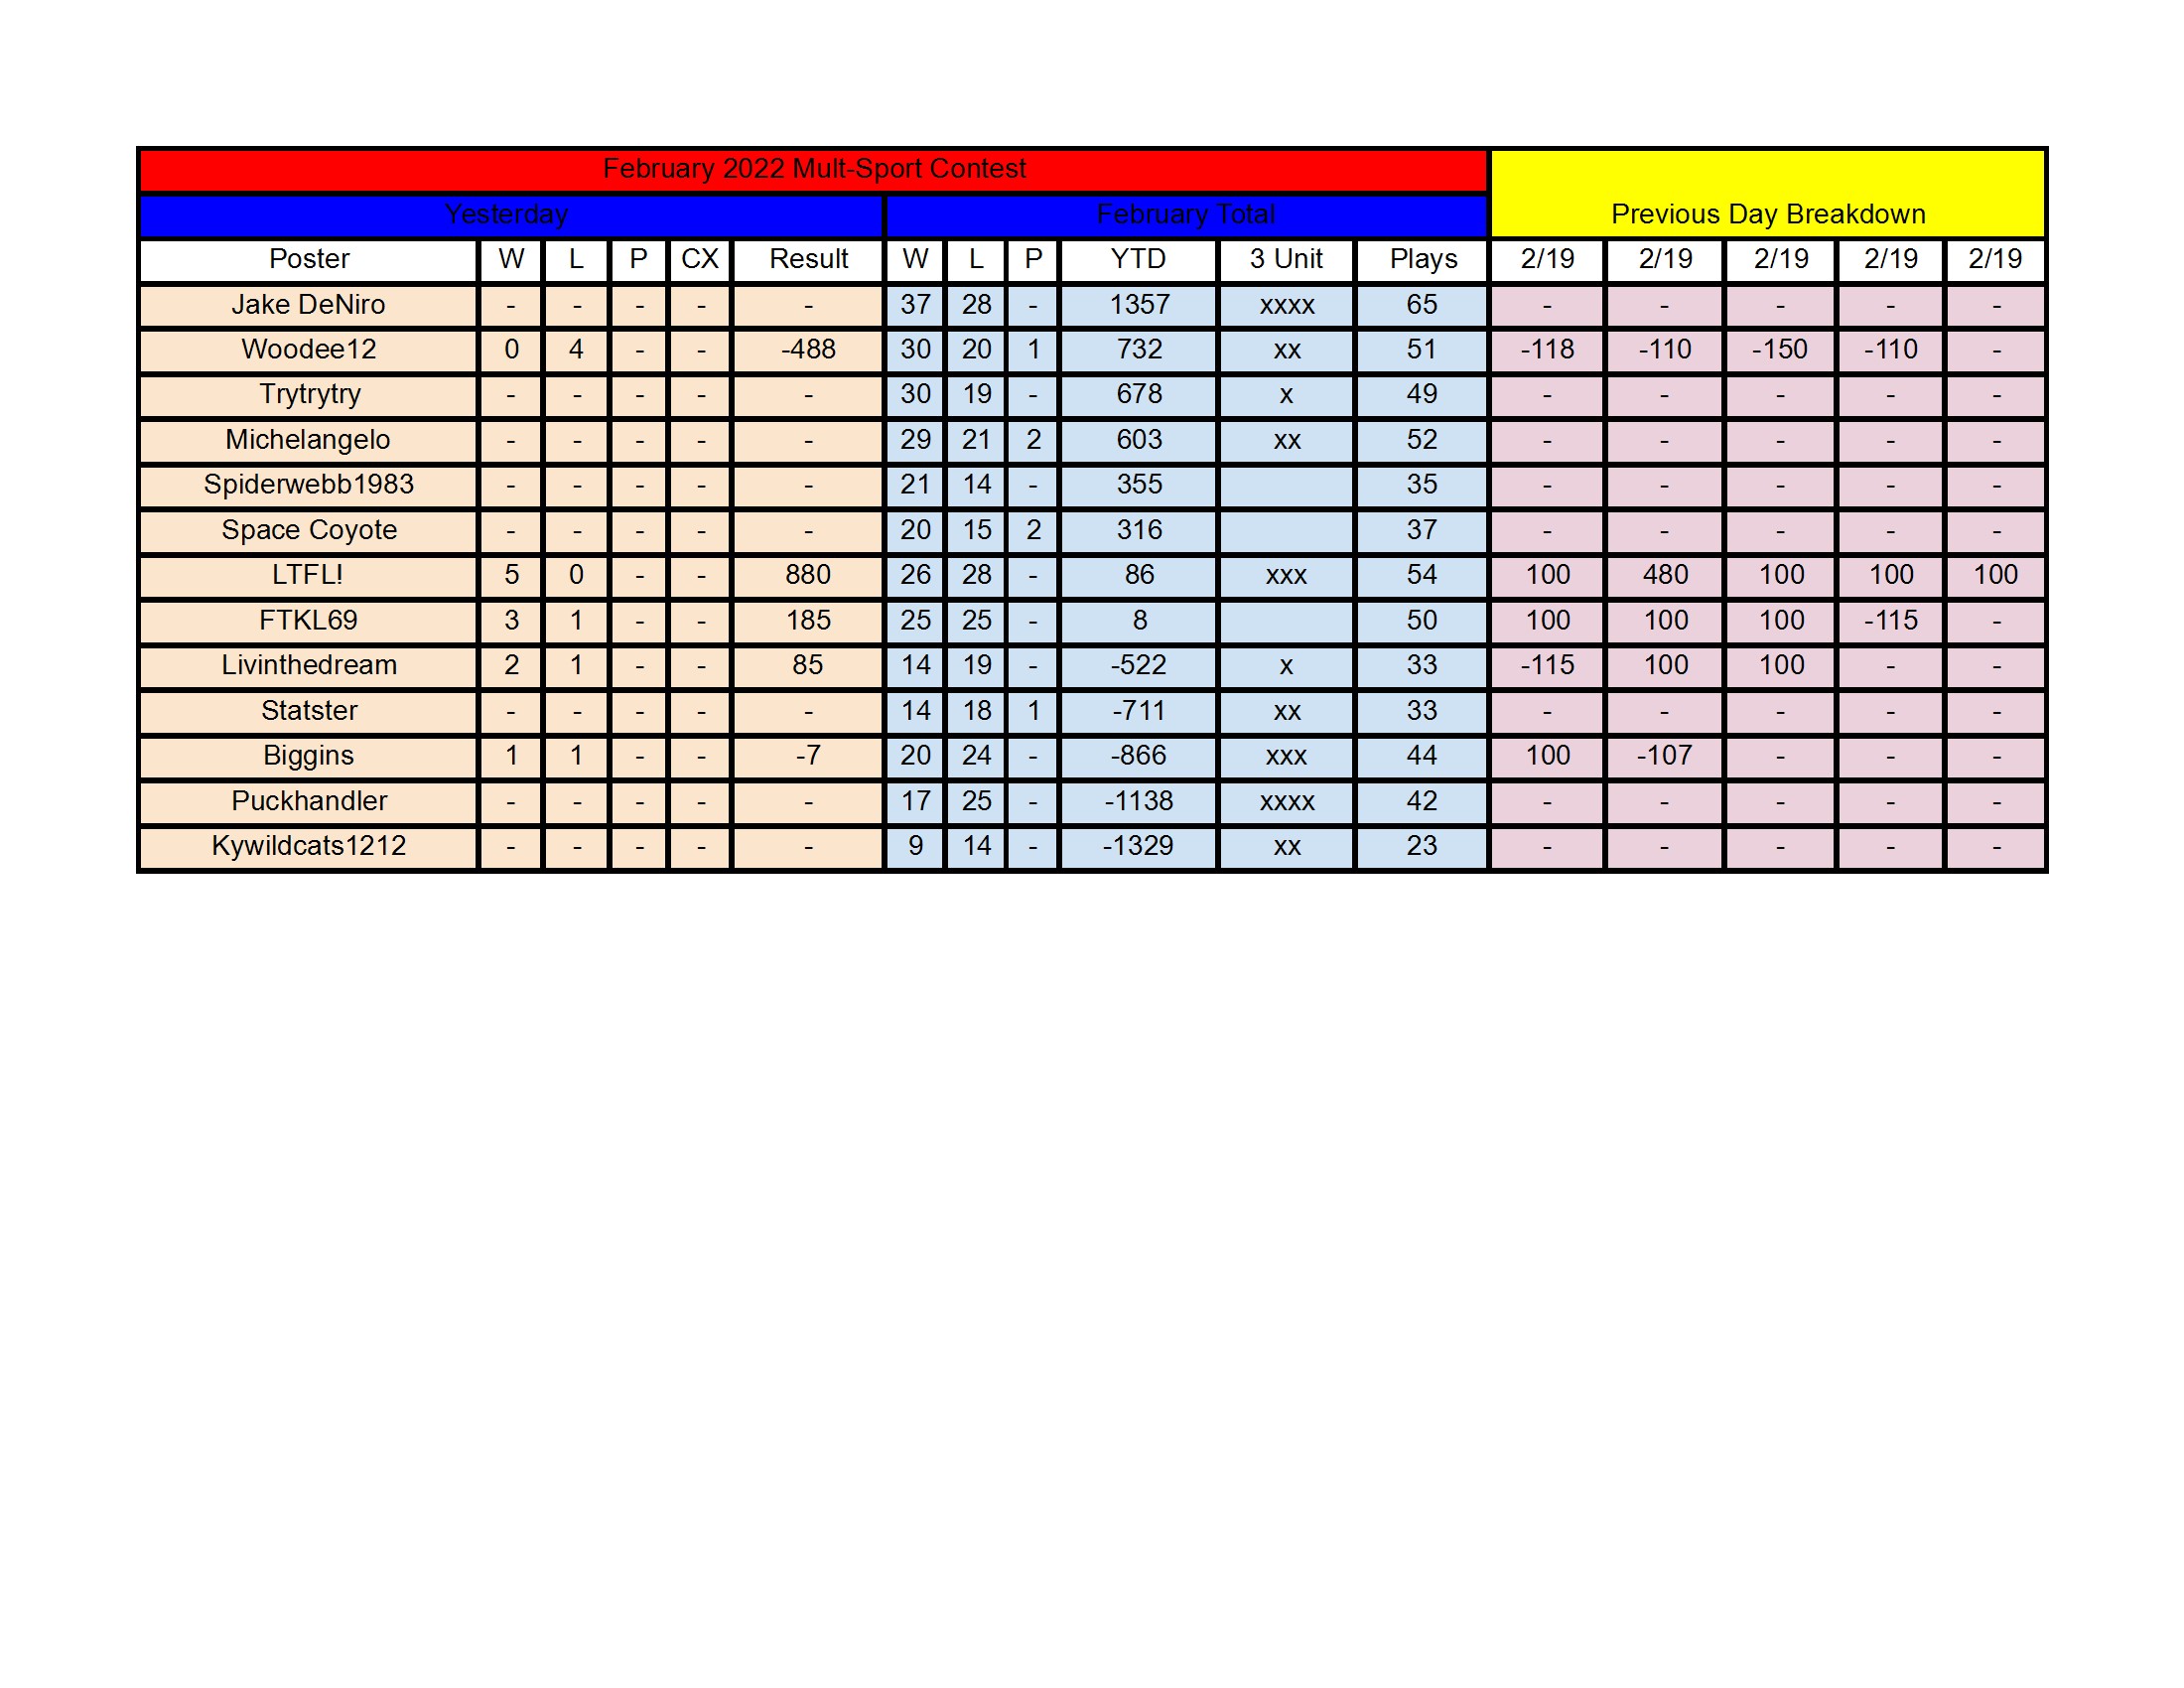 February Standings - 2_19 conv 1.jpeg